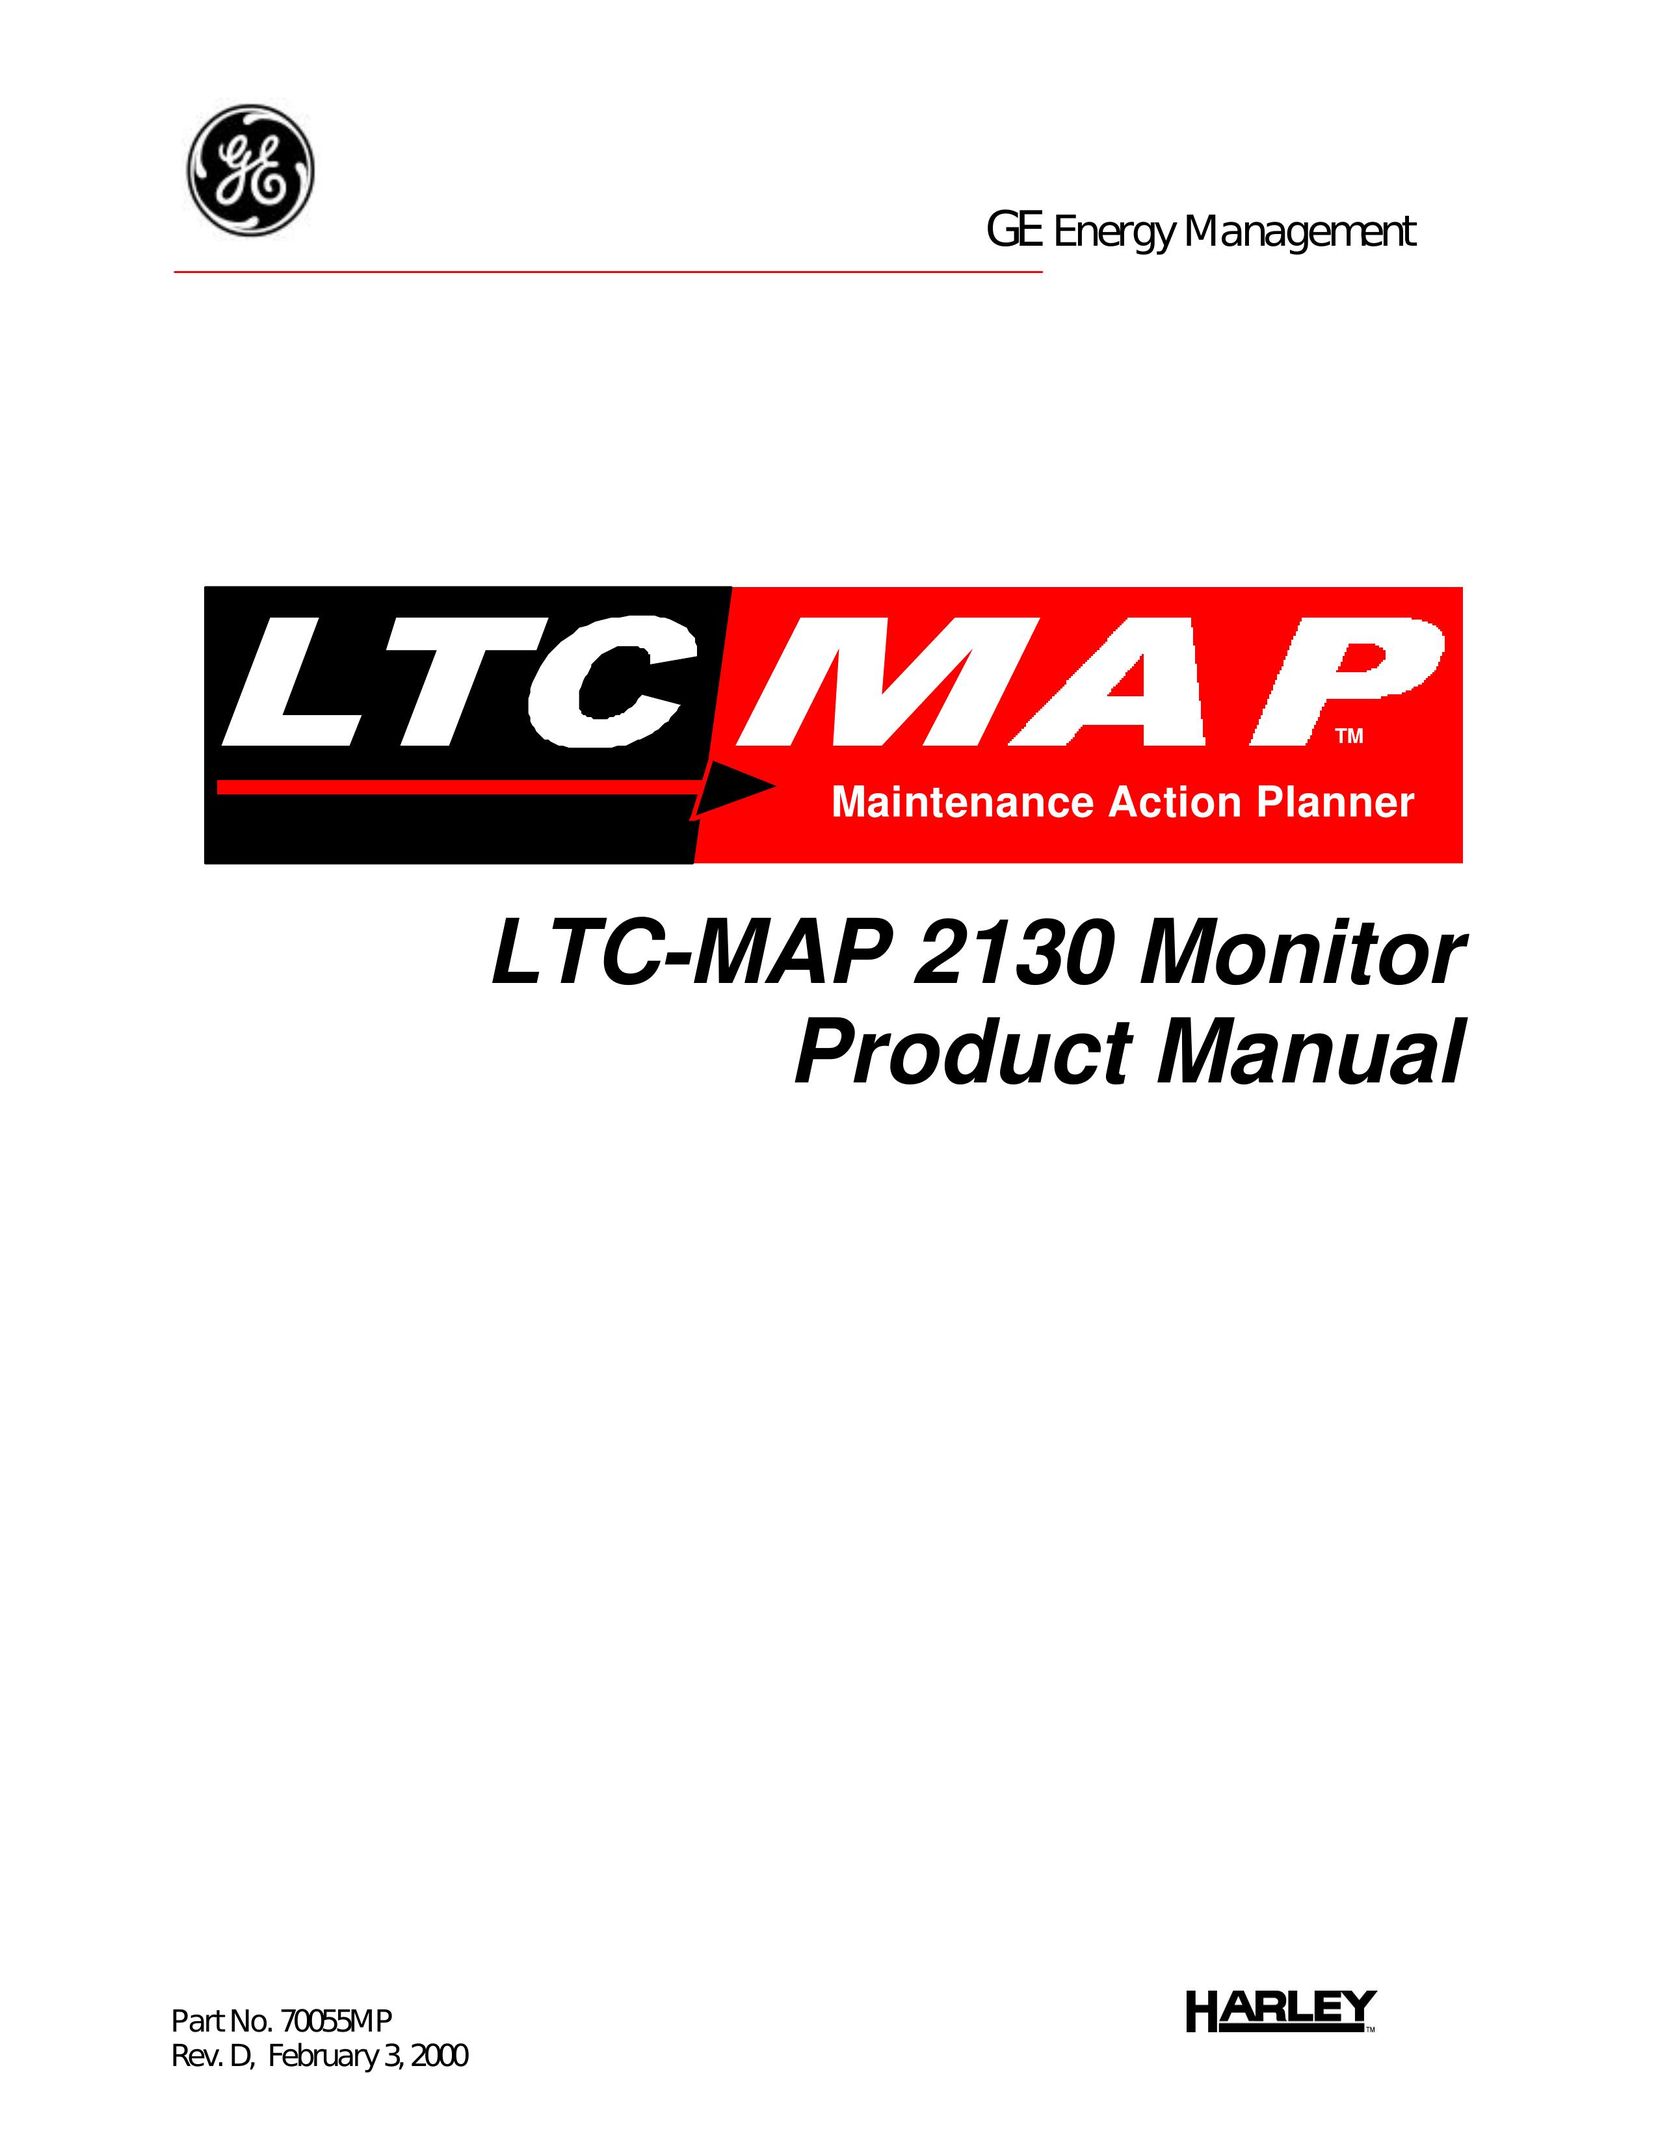 GE LTC MAP Computer Monitor User Manual